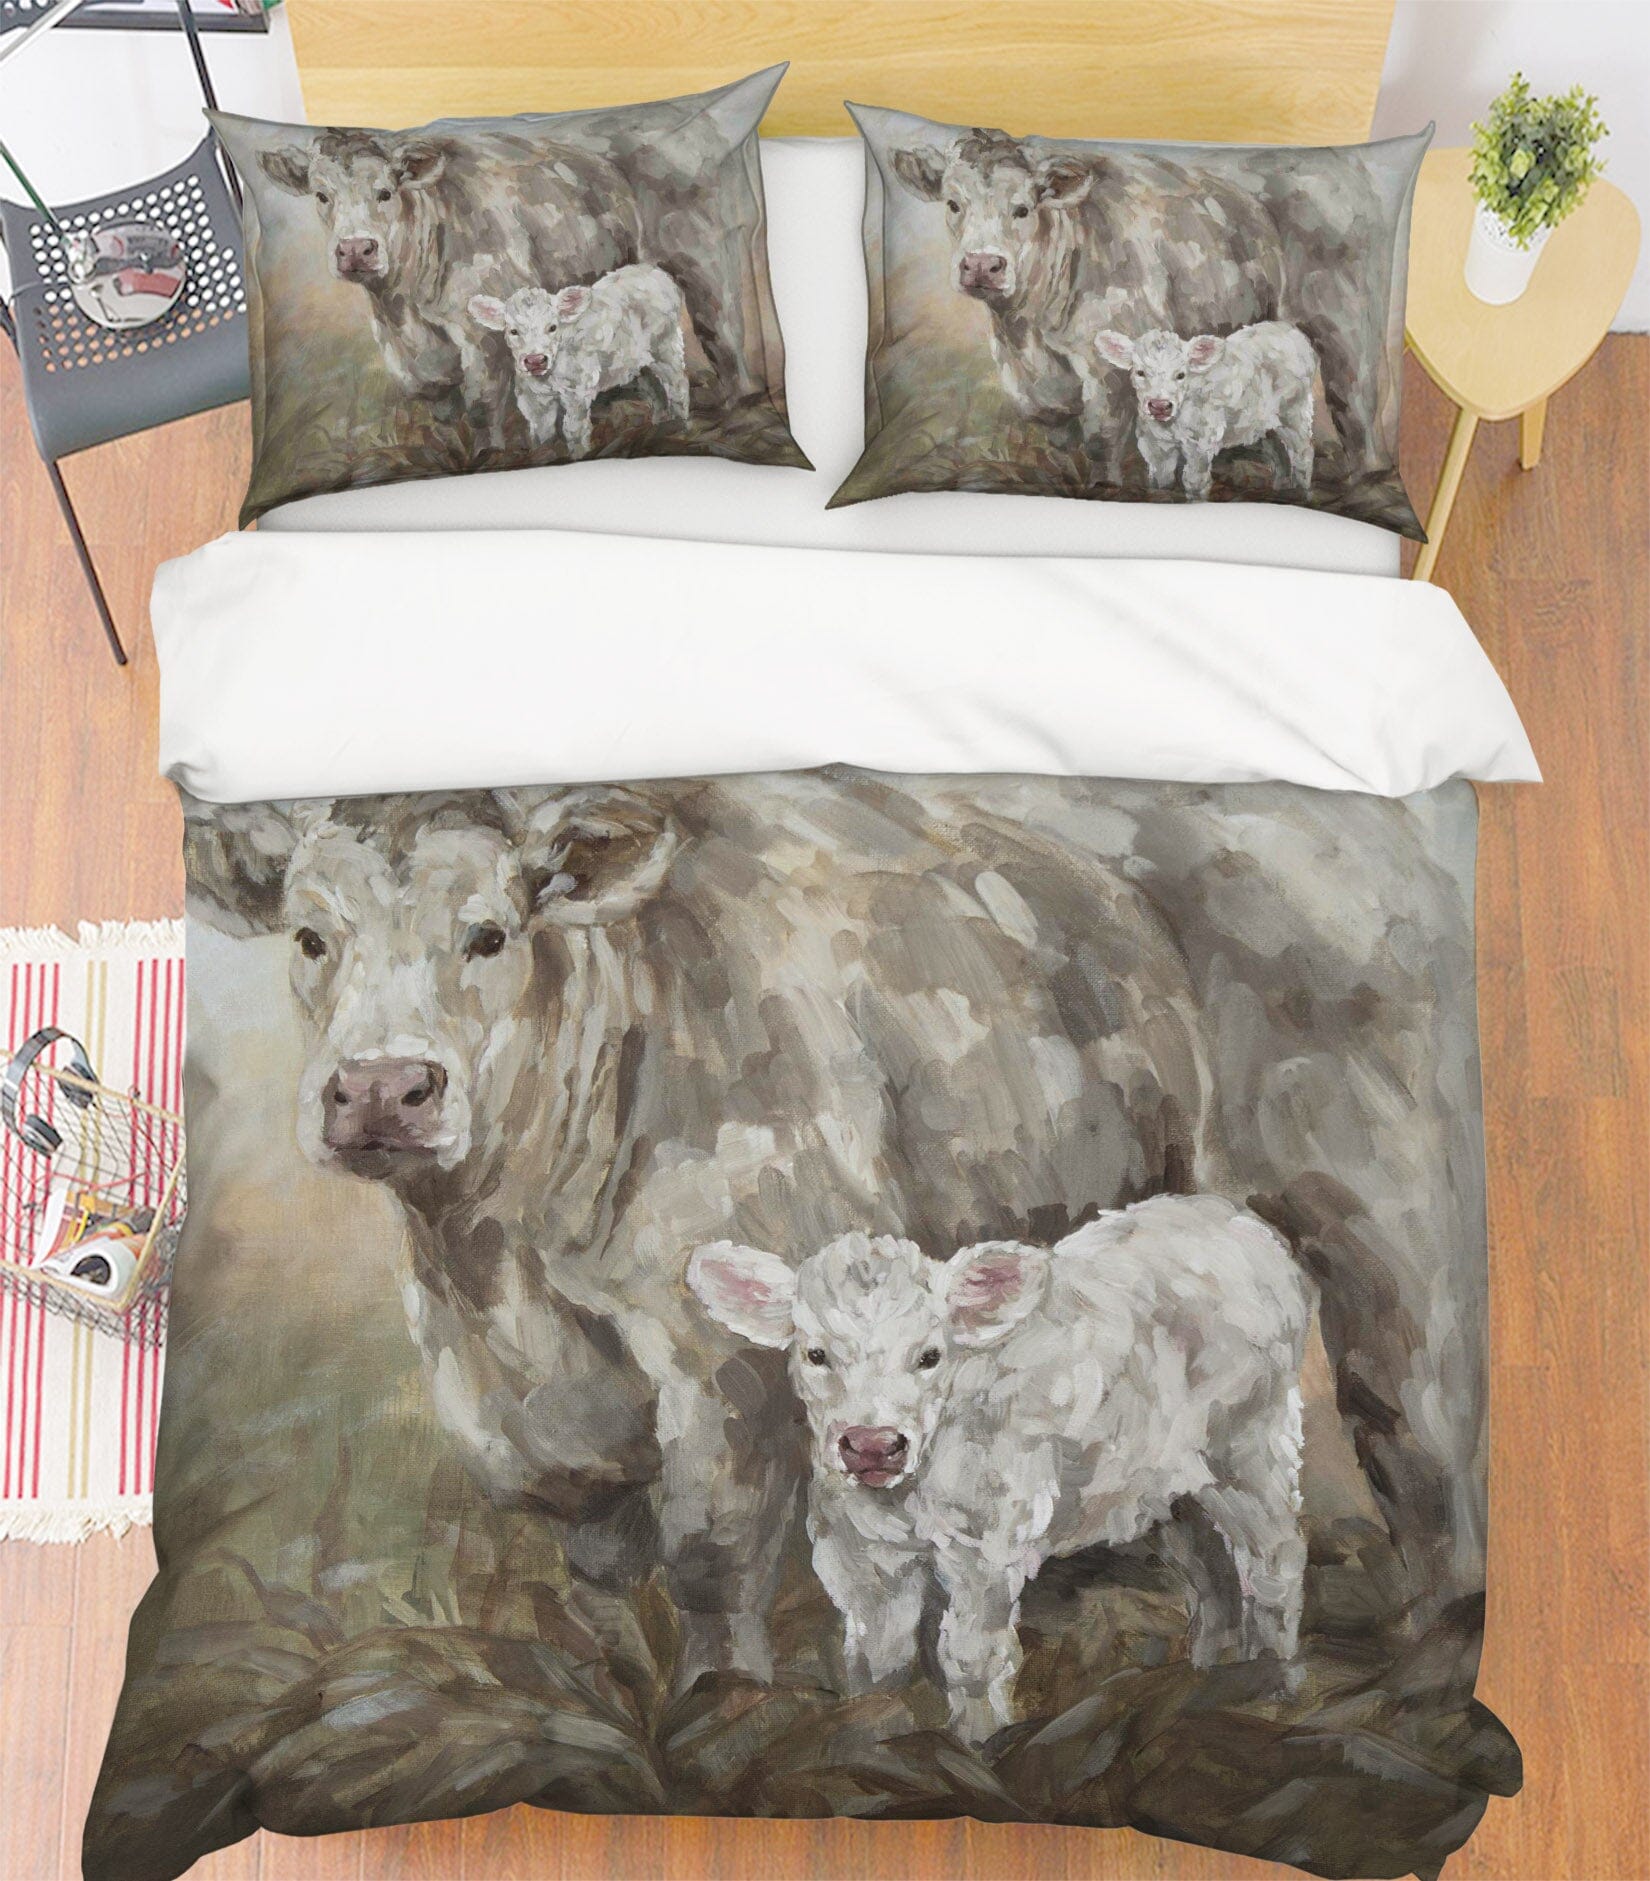 3D Cute Cow 040 Debi Coules Bedding Bed Pillowcases Quilt Quiet Covers AJ Creativity Home 